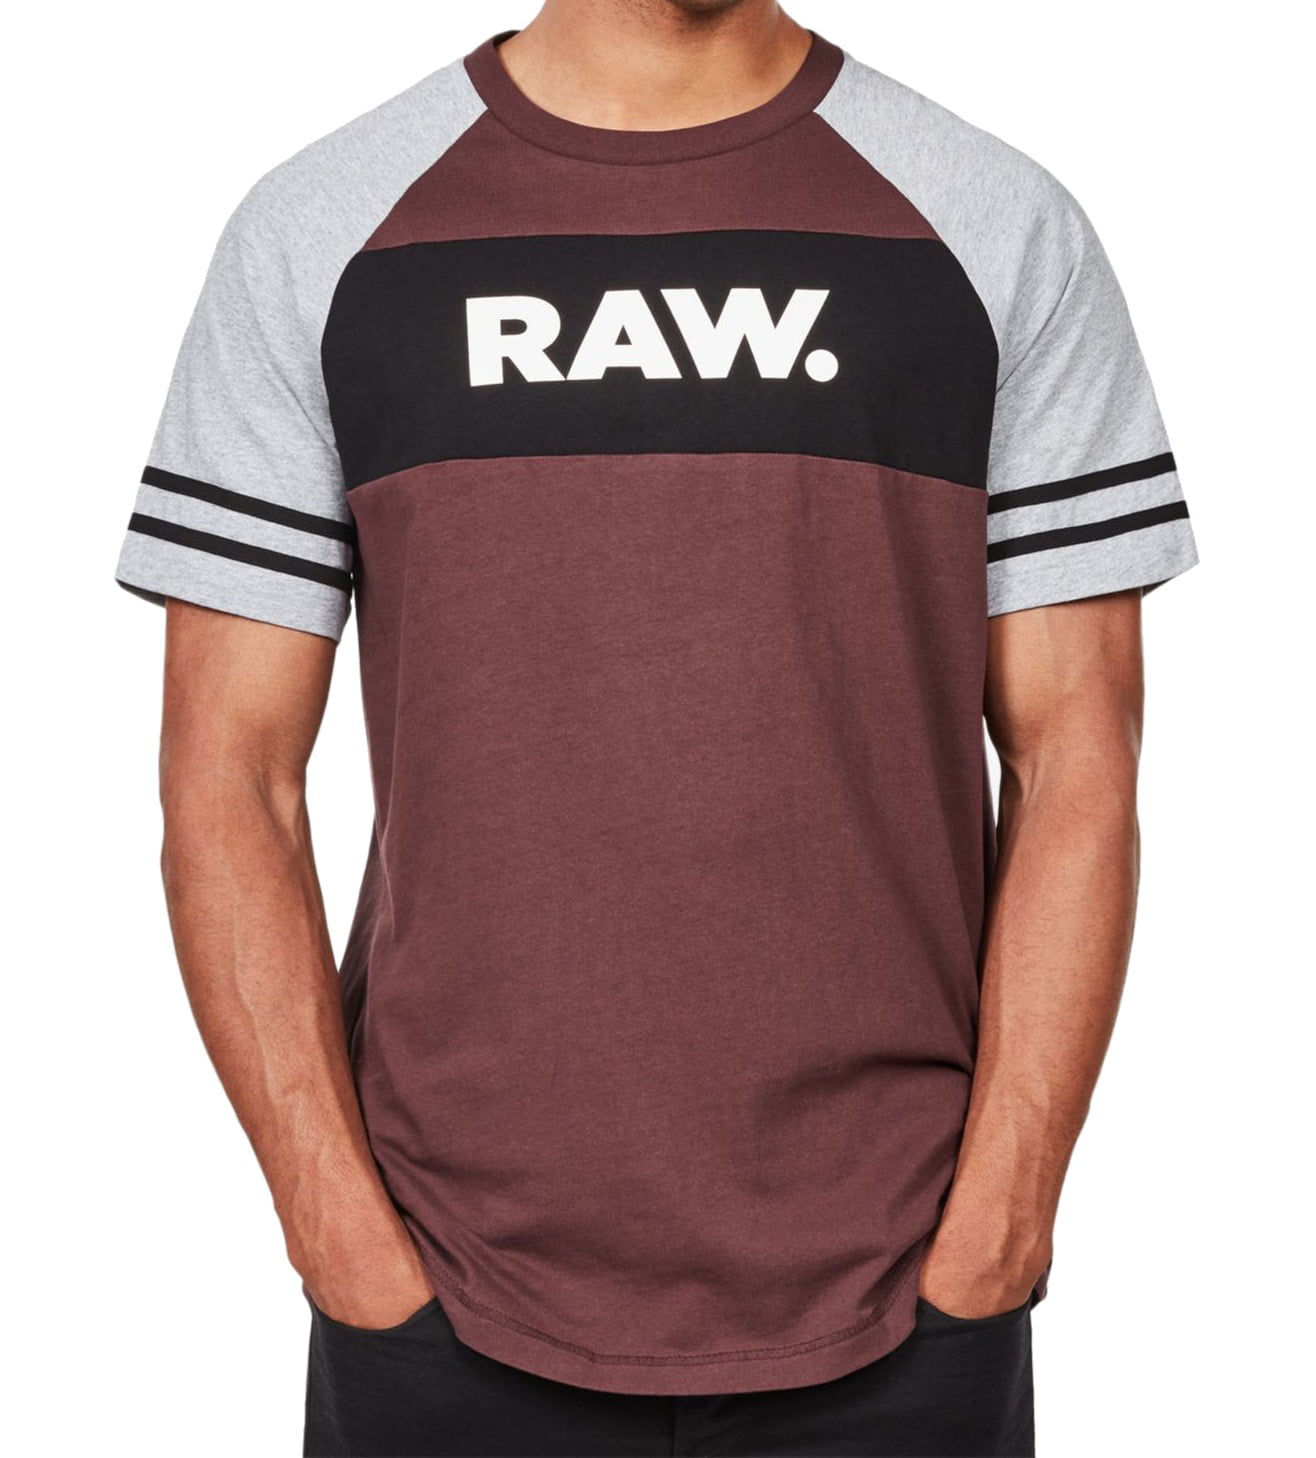 Raw Clothing Brand T Shirt - Best Design Idea